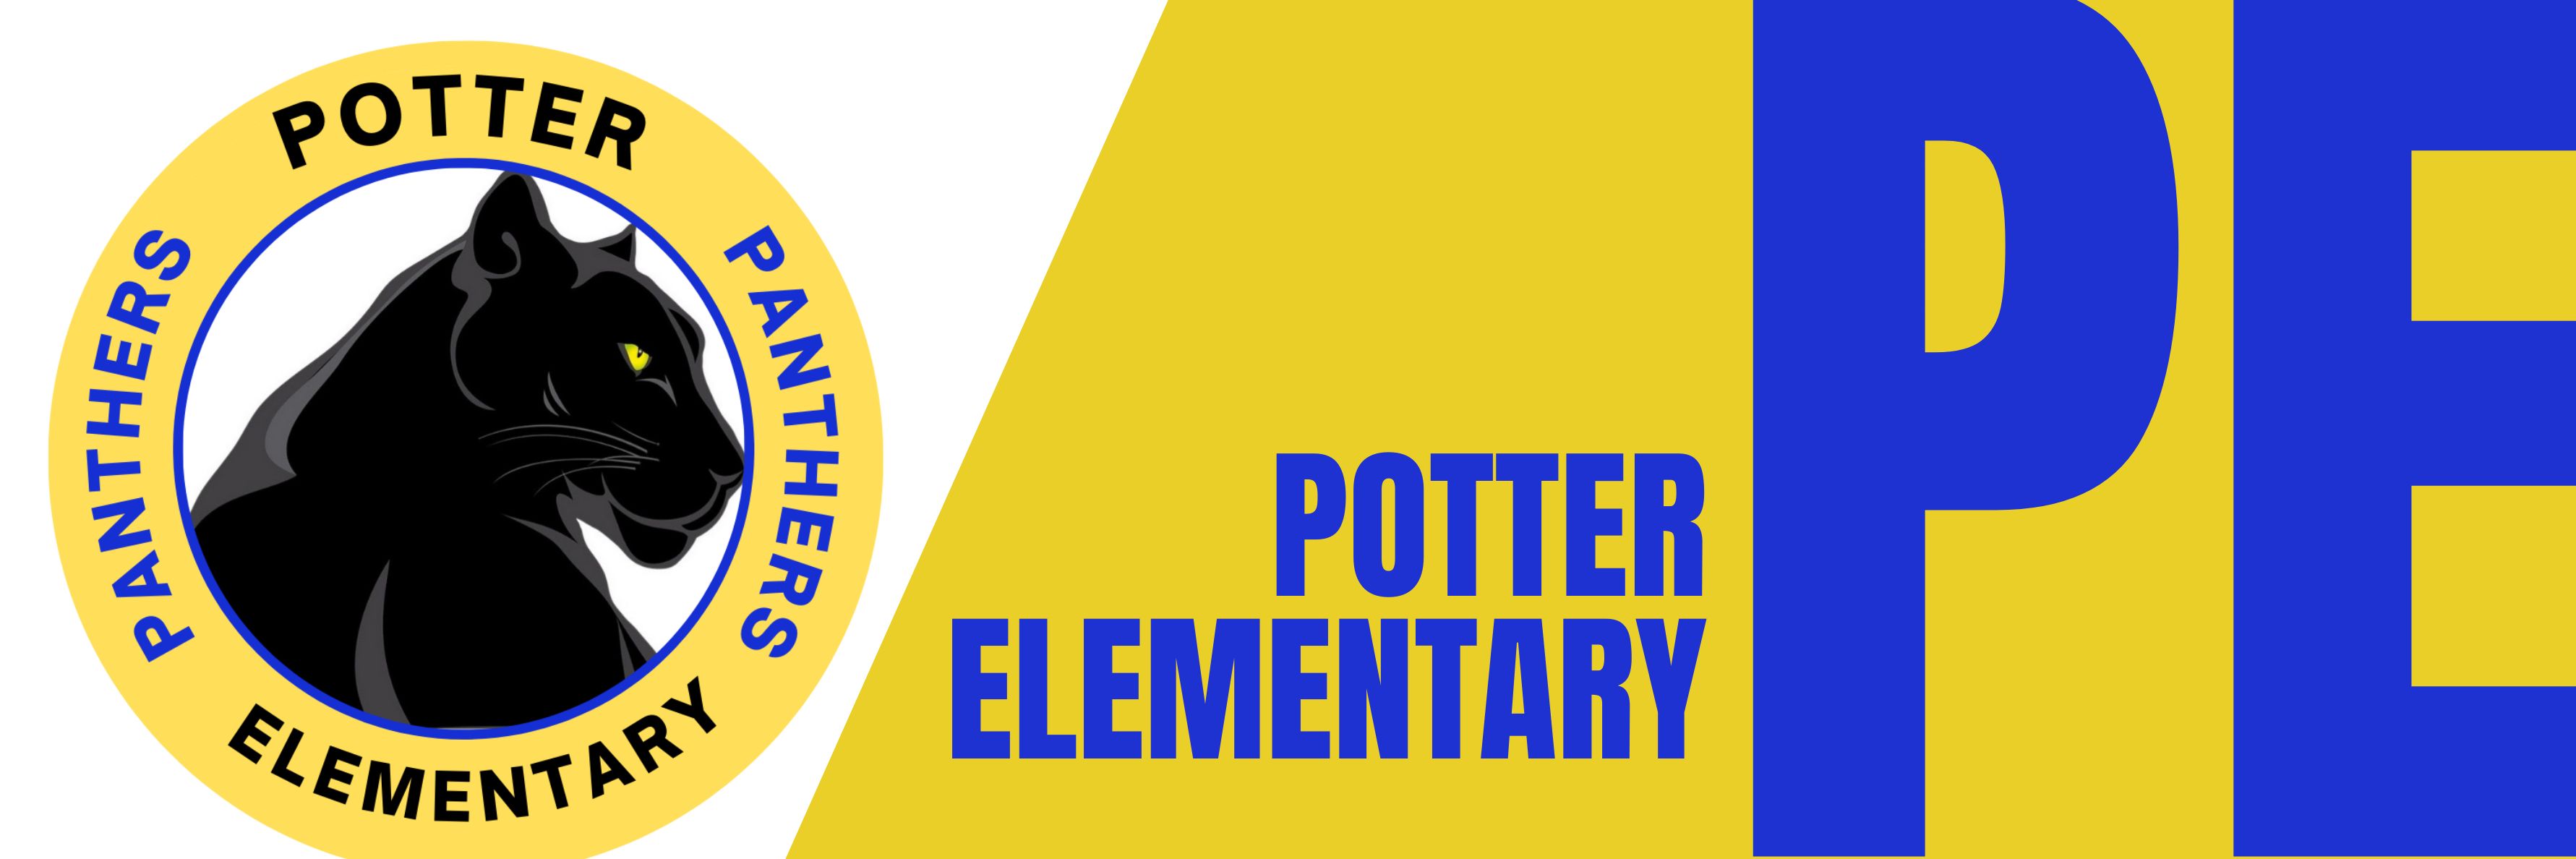 Potter Elementary